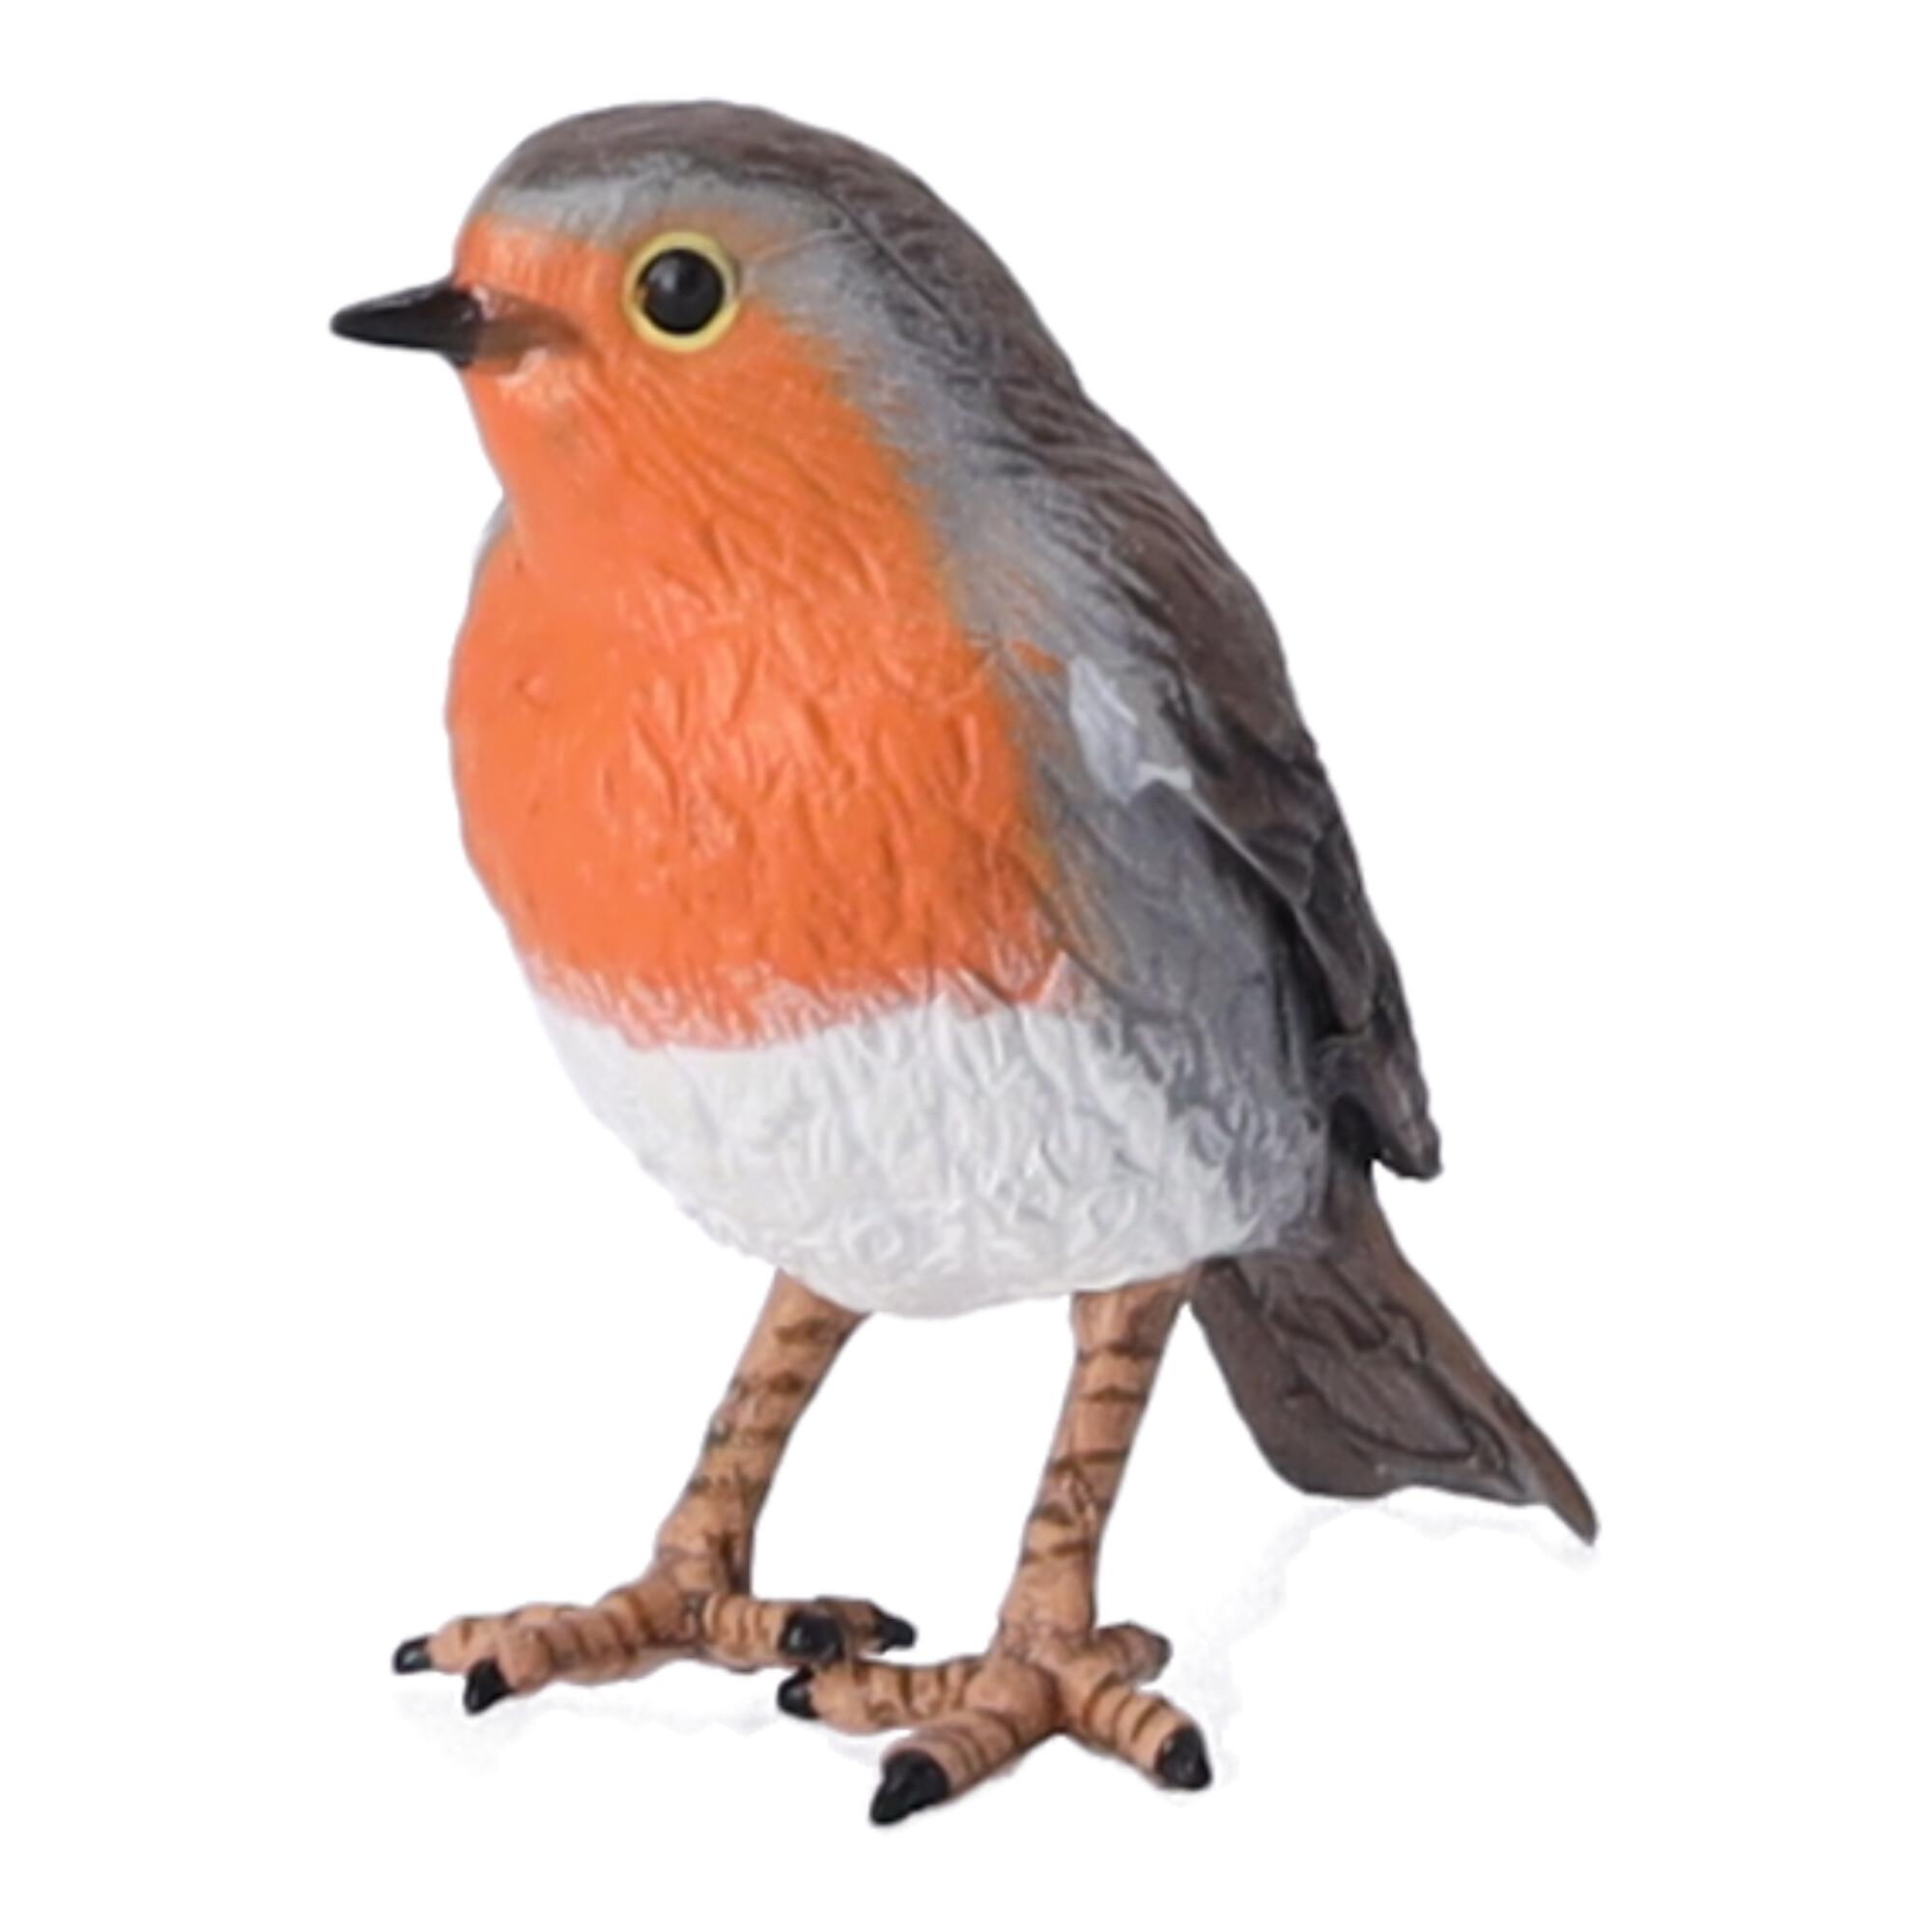 Collectible figurine Ruddy bird, Papo